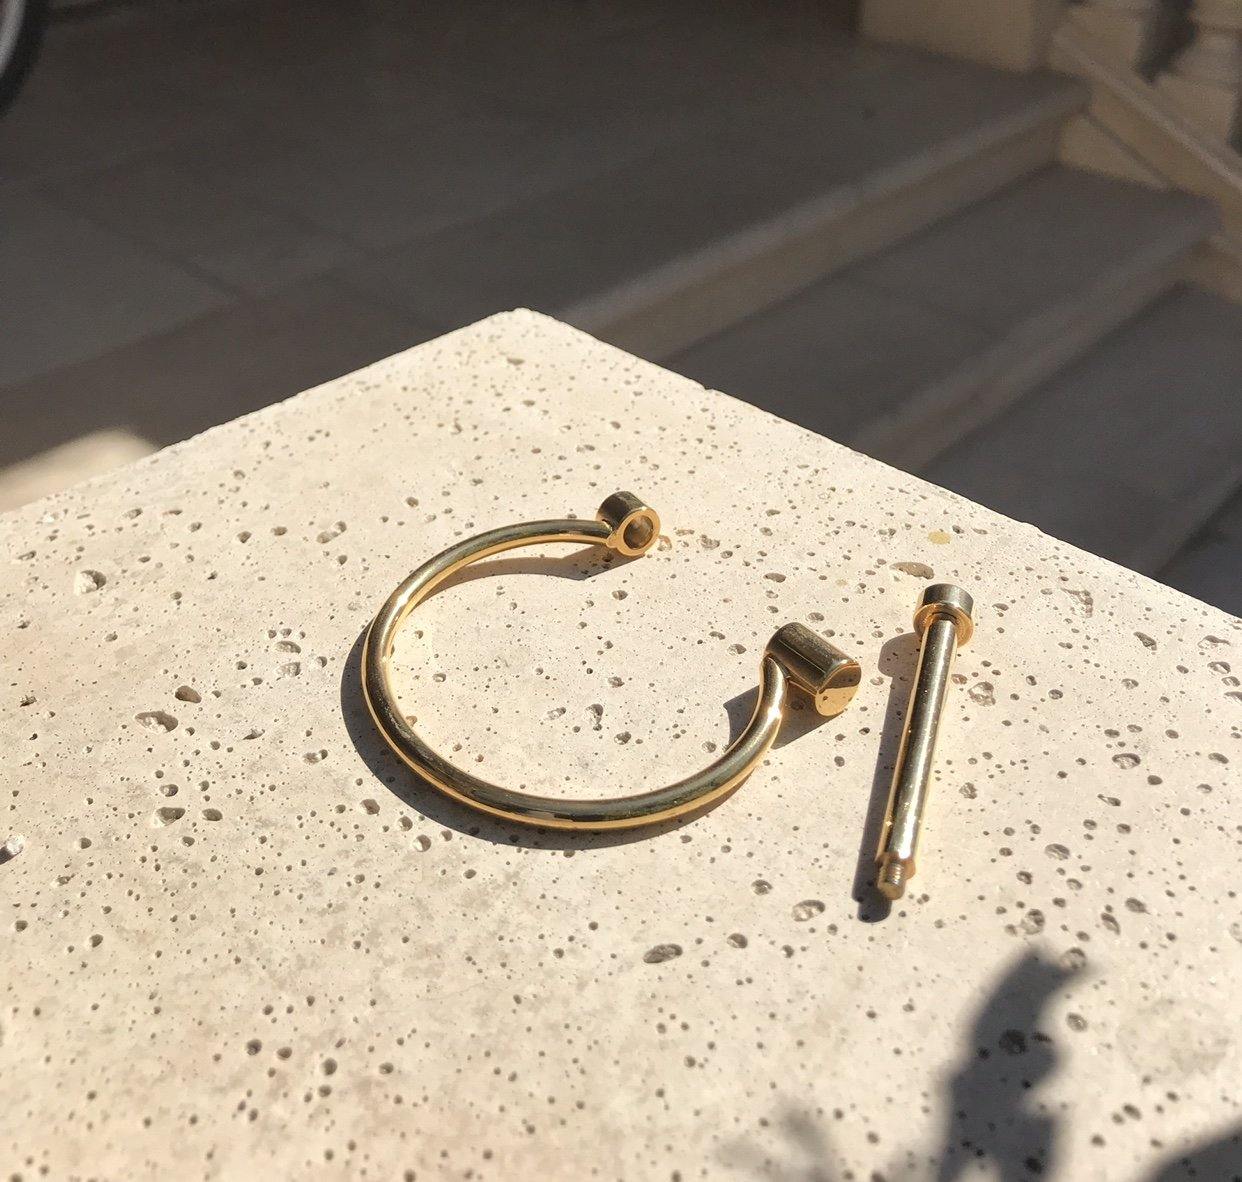 How to unscrew a gold screw cuff bracelet